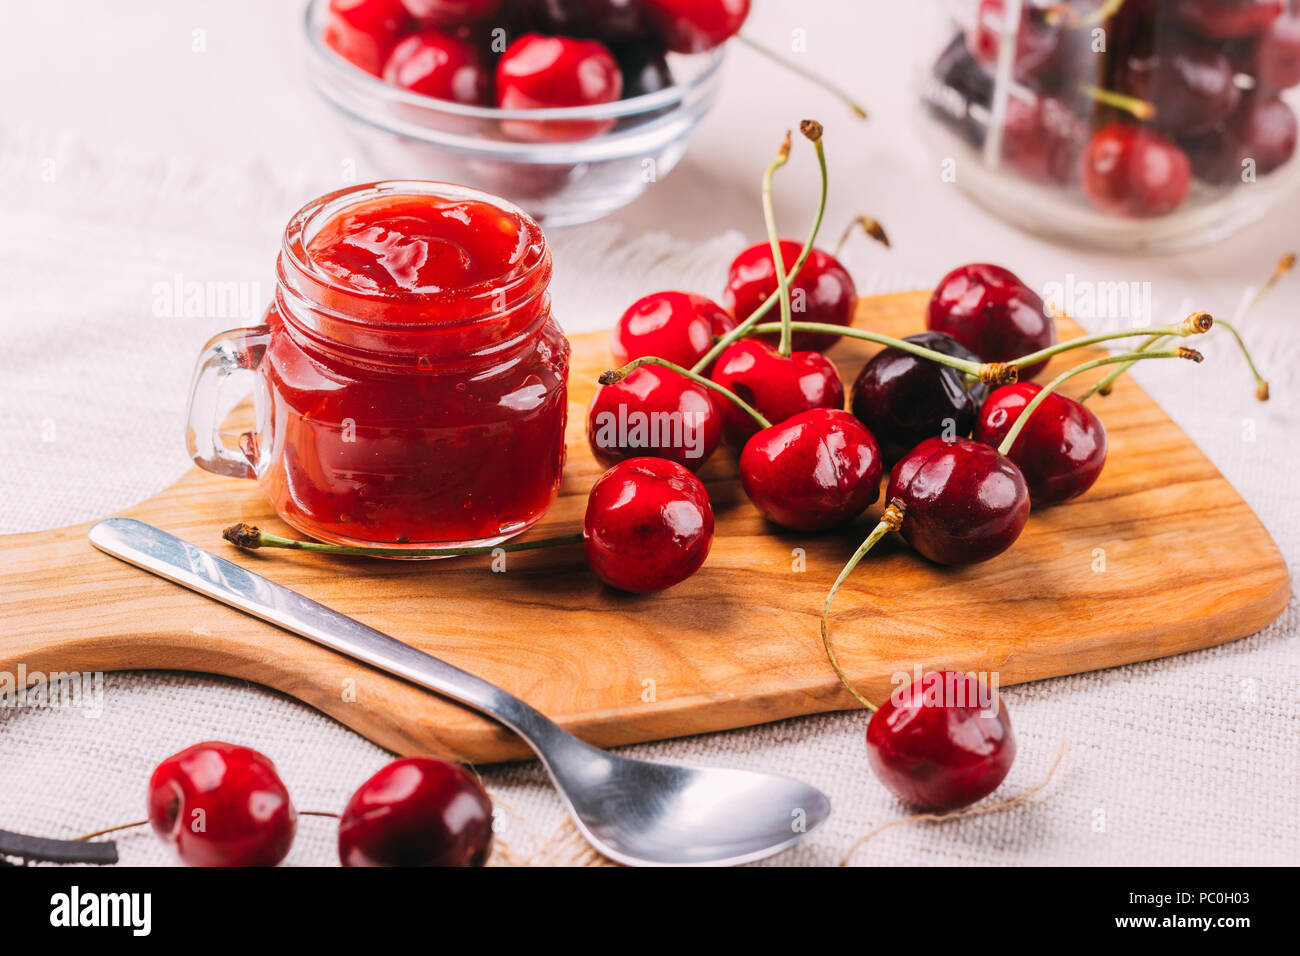 Homemade preparation of cherry jam, sweet food Stock Photo